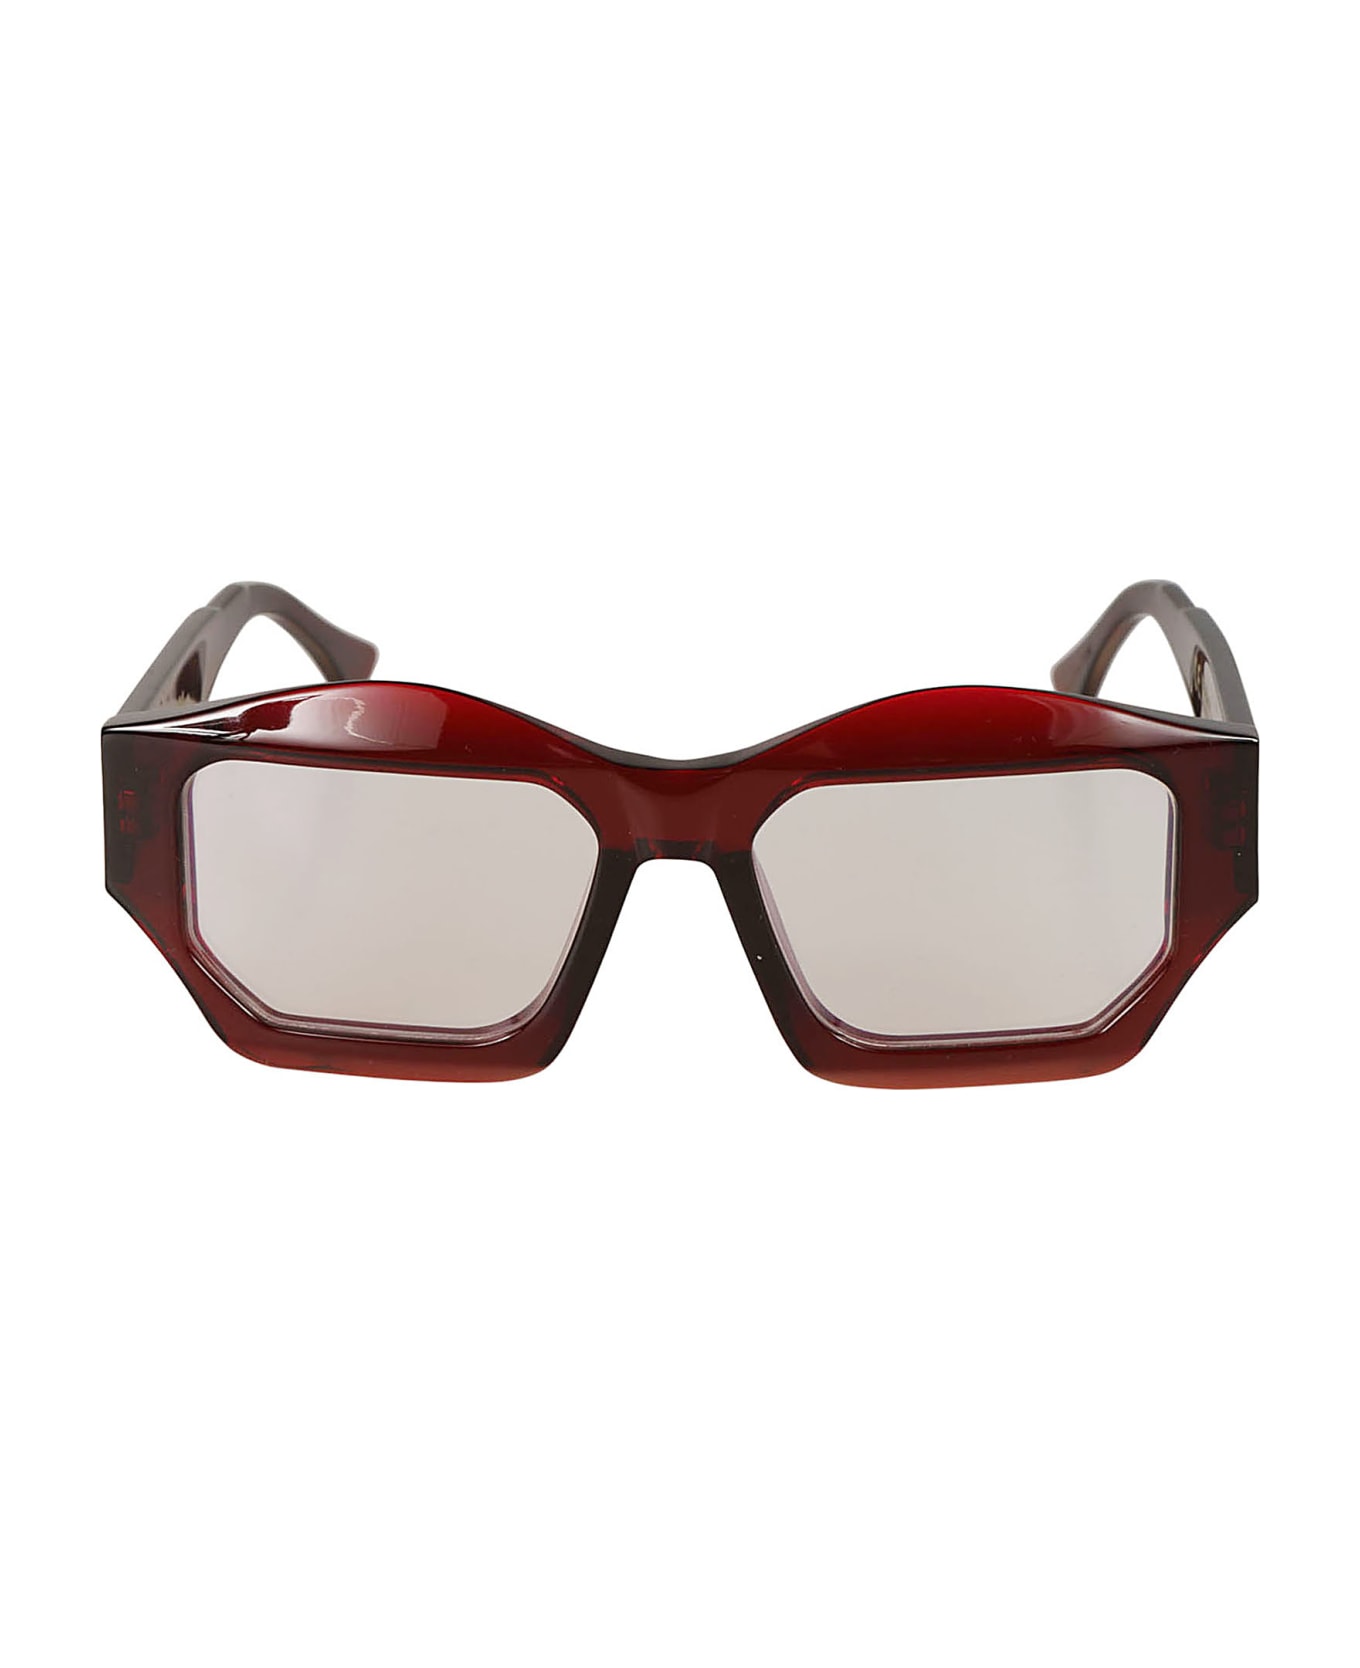 Kuboraum F4 Glasses Glasses - bordeaux